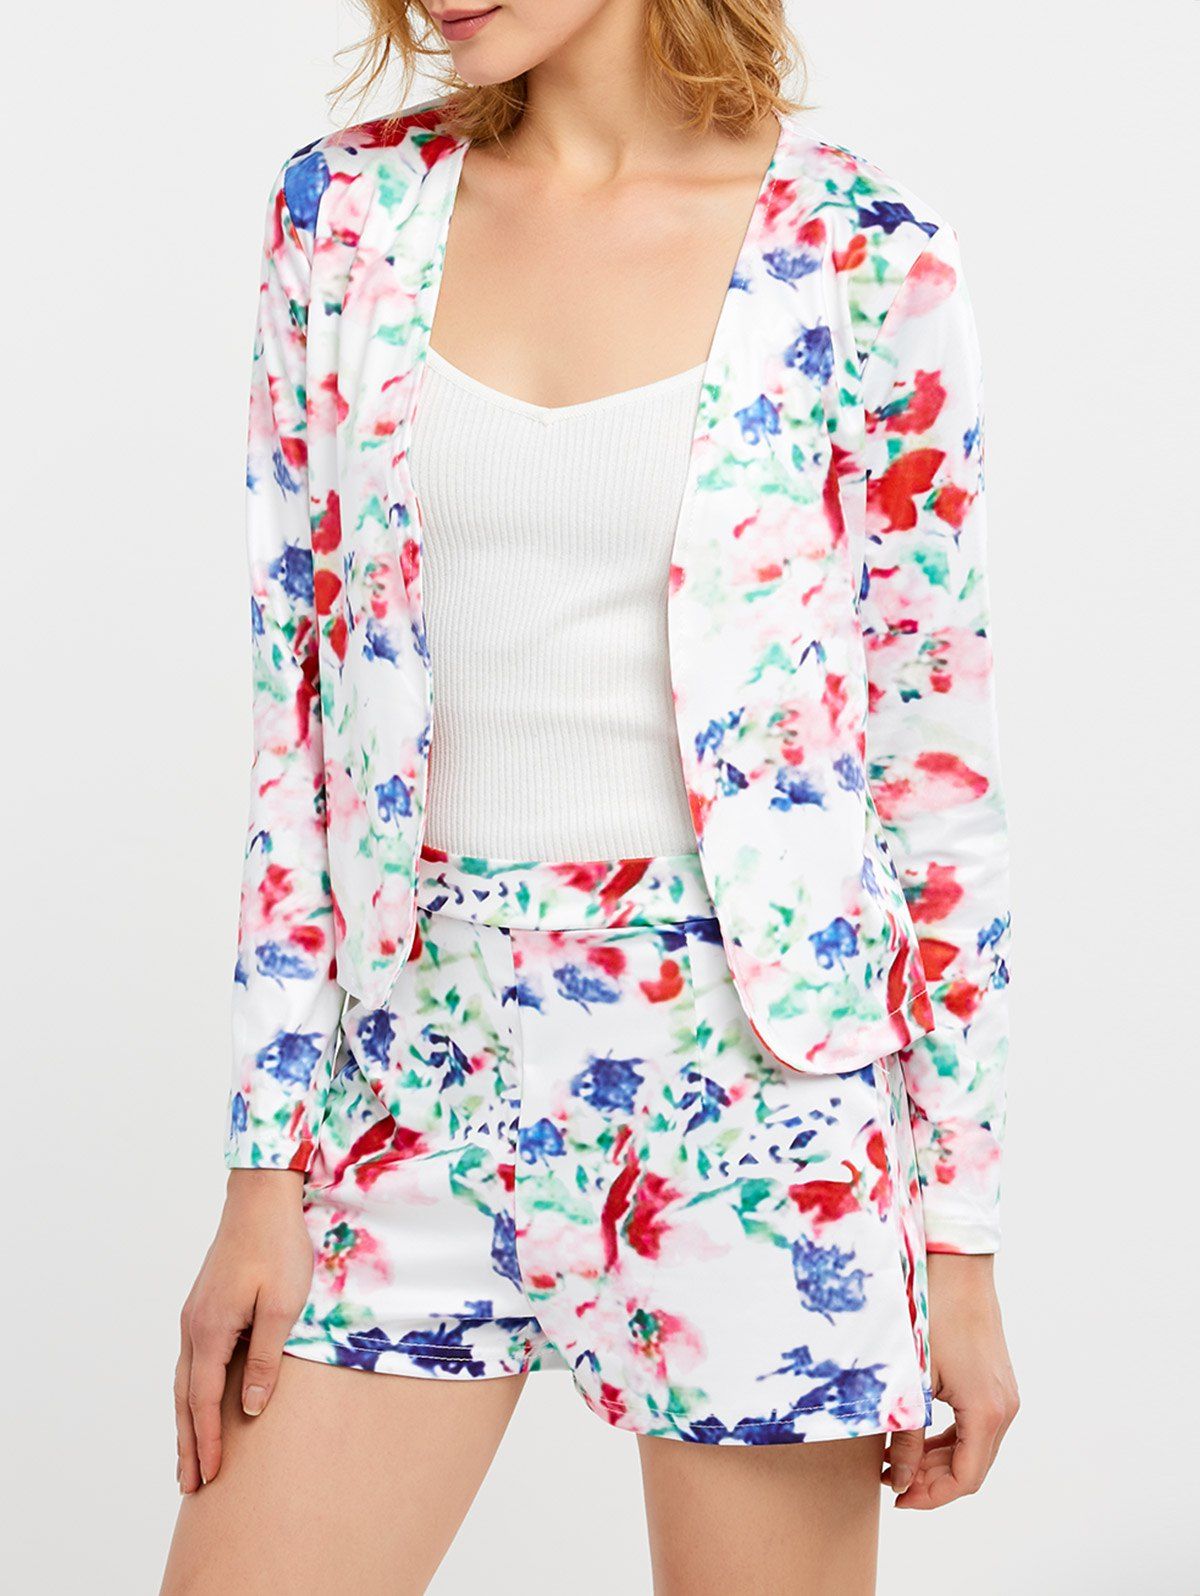 Shop Floral Print Business Suit with Shorts  